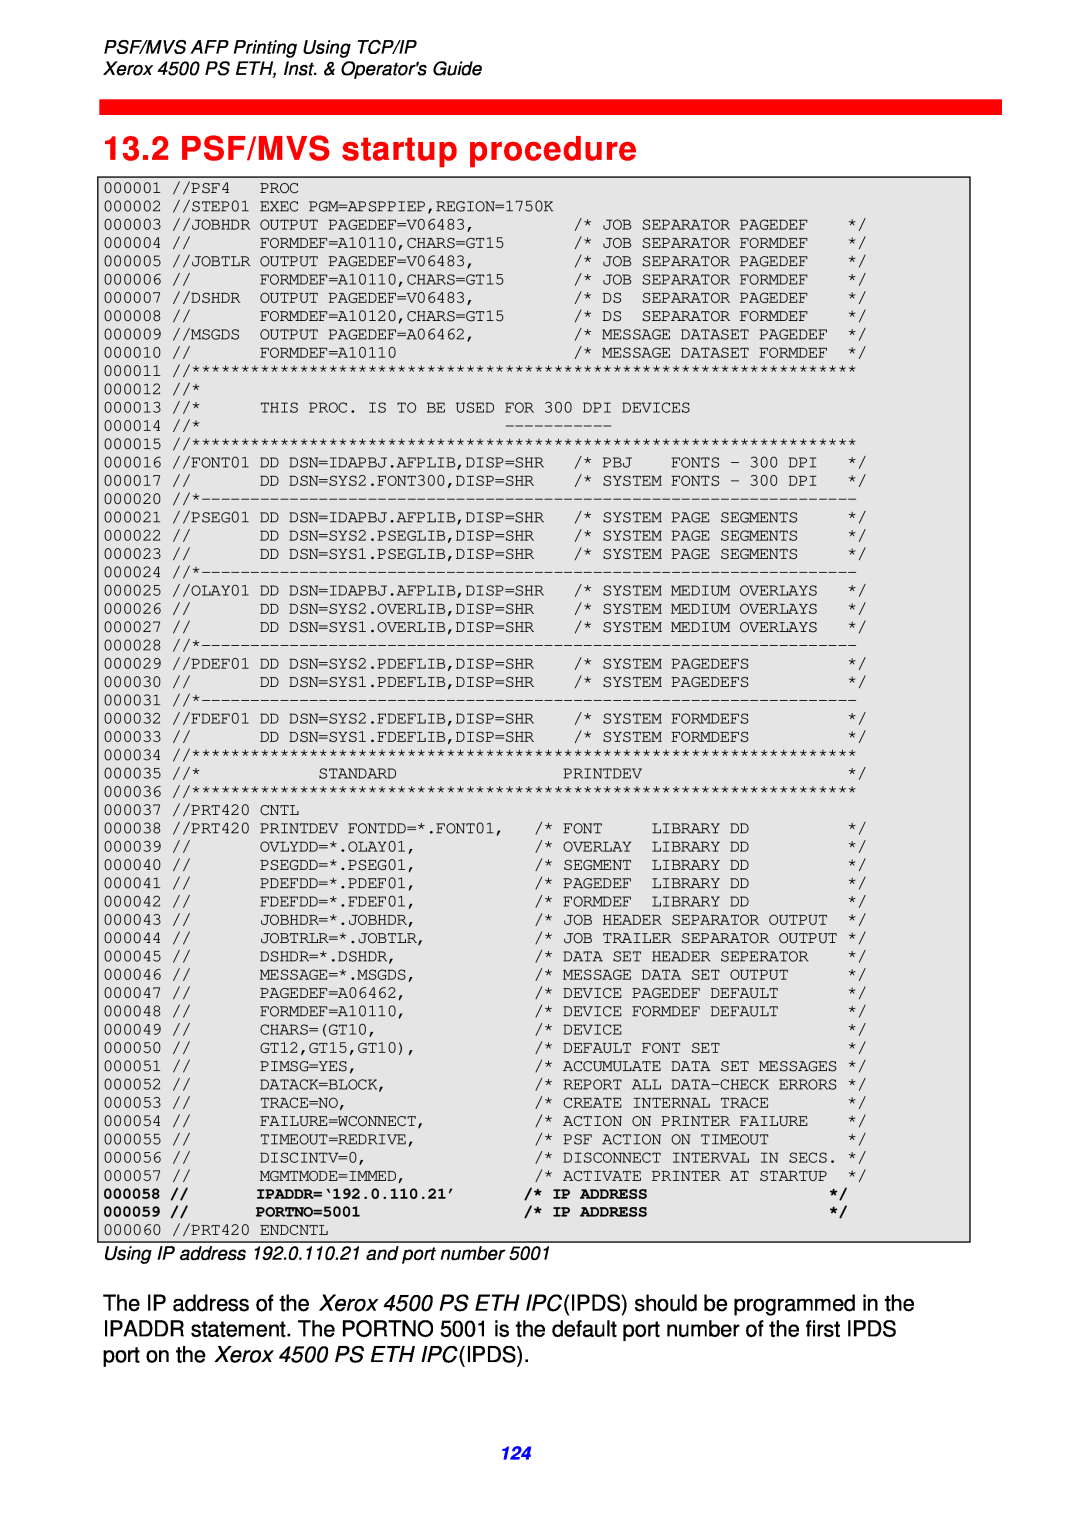 Xerox 4500 ps eth instruction manual 13.2 PSF/MVS startup procedure, PSF/MVS AFP Printing Using TCP/IP 